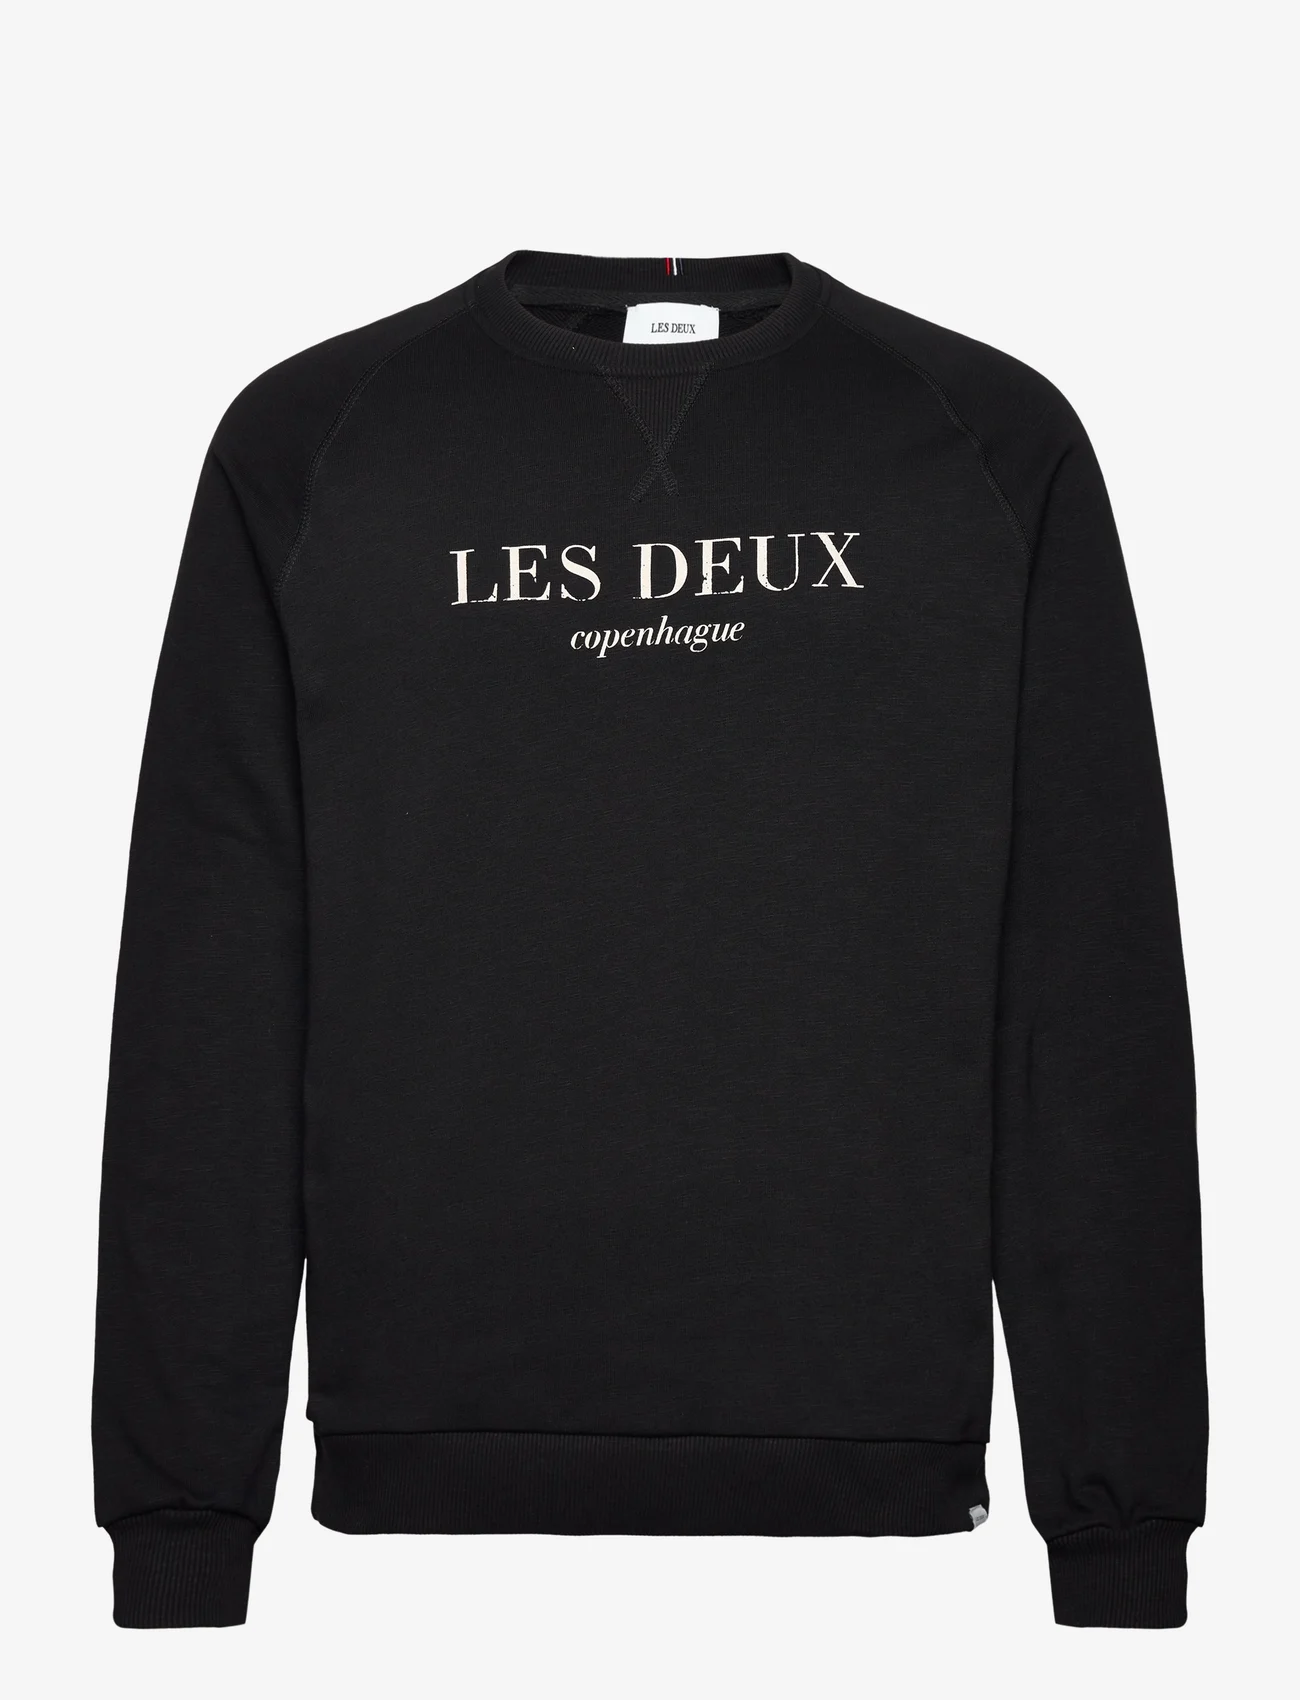 Les Deux - Amalfi Sweatshirt - sweatshirts - black/ivory - 0